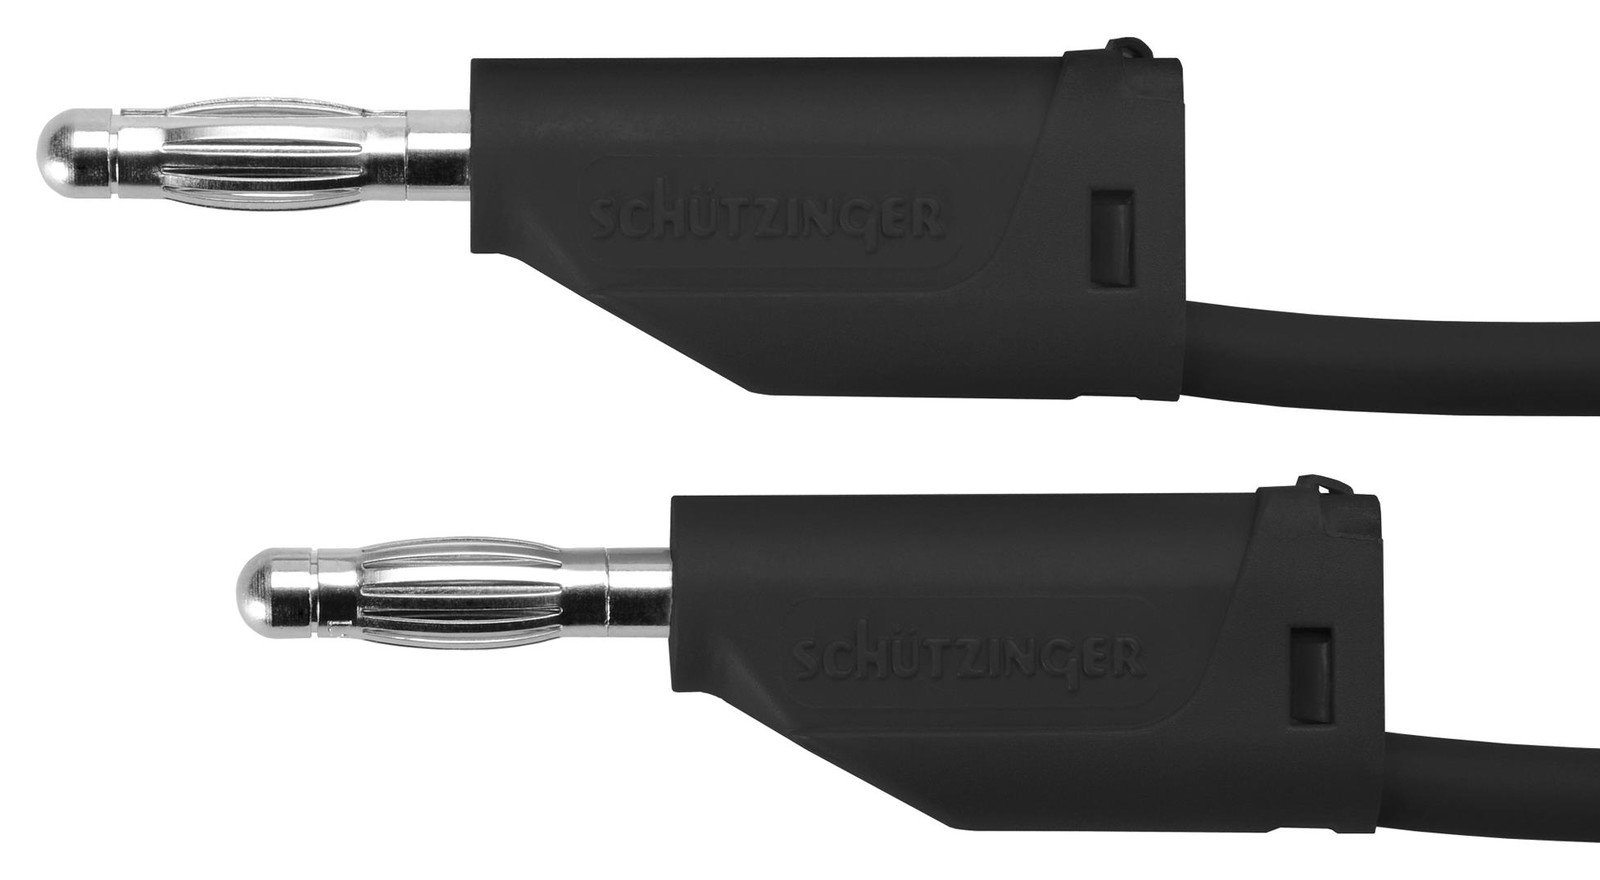 Schutzinger Mfk 15 / 1 / 100 / Sw Test Lead, 4Mm Stackable Banana Plug, 1M